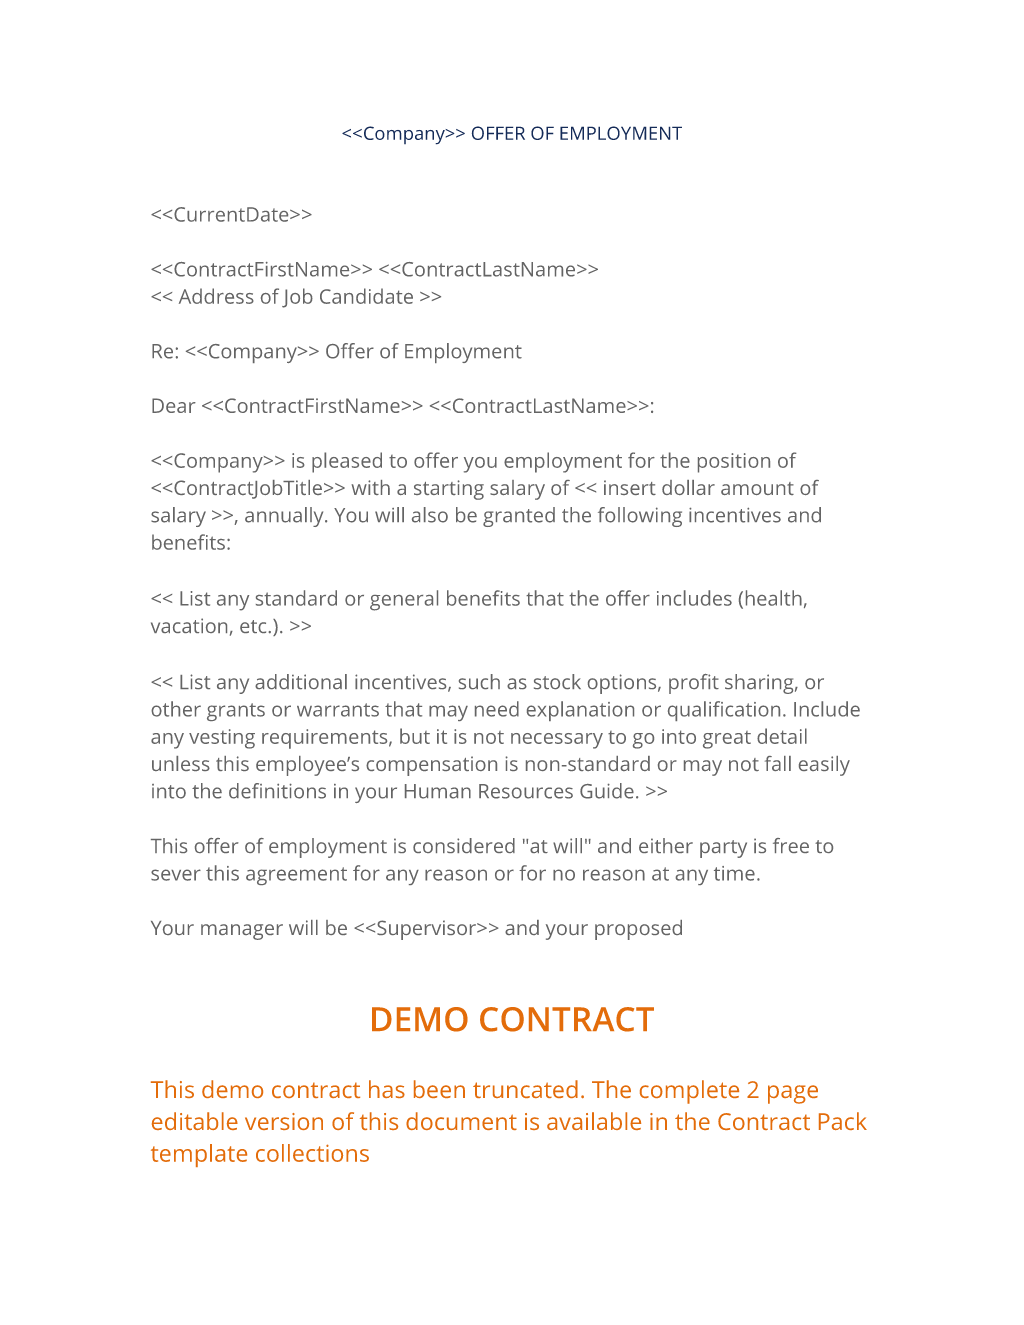 Contingent Job Offer Letter from www.proposalkit.com